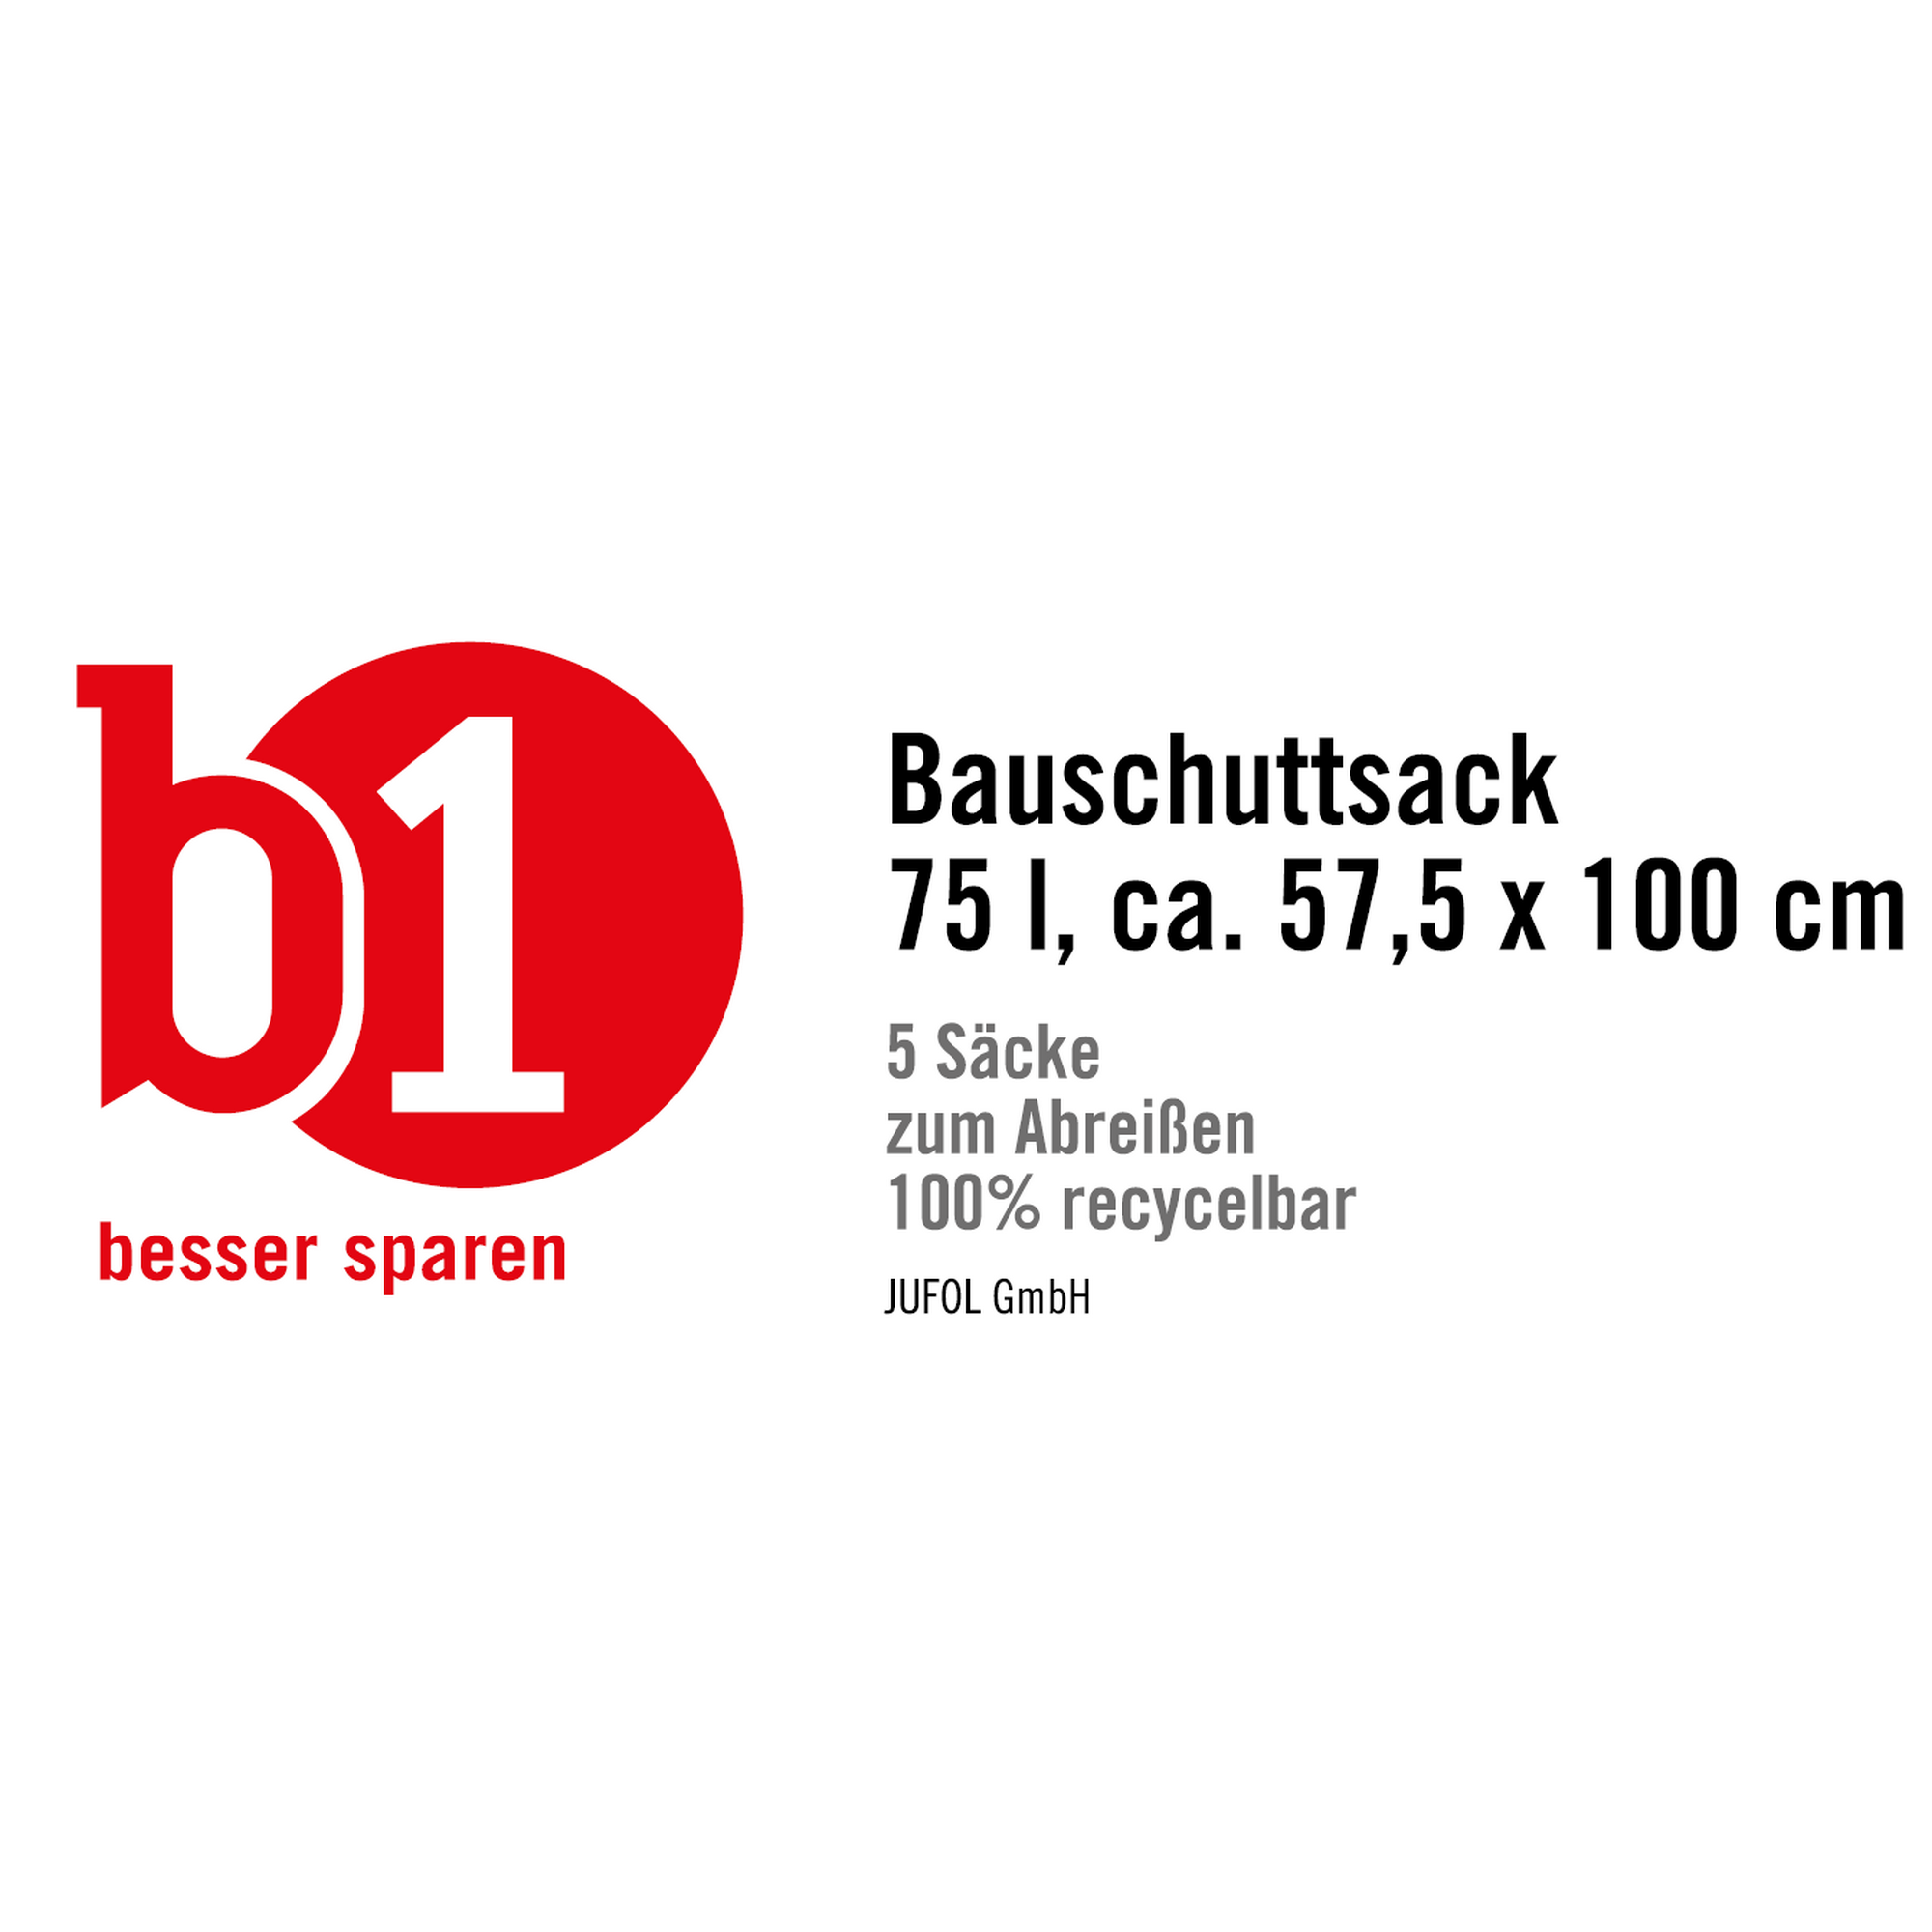 Bauschuttsäcke schwarz 57,5 x 100 cm 75 l 5 Stück + product picture